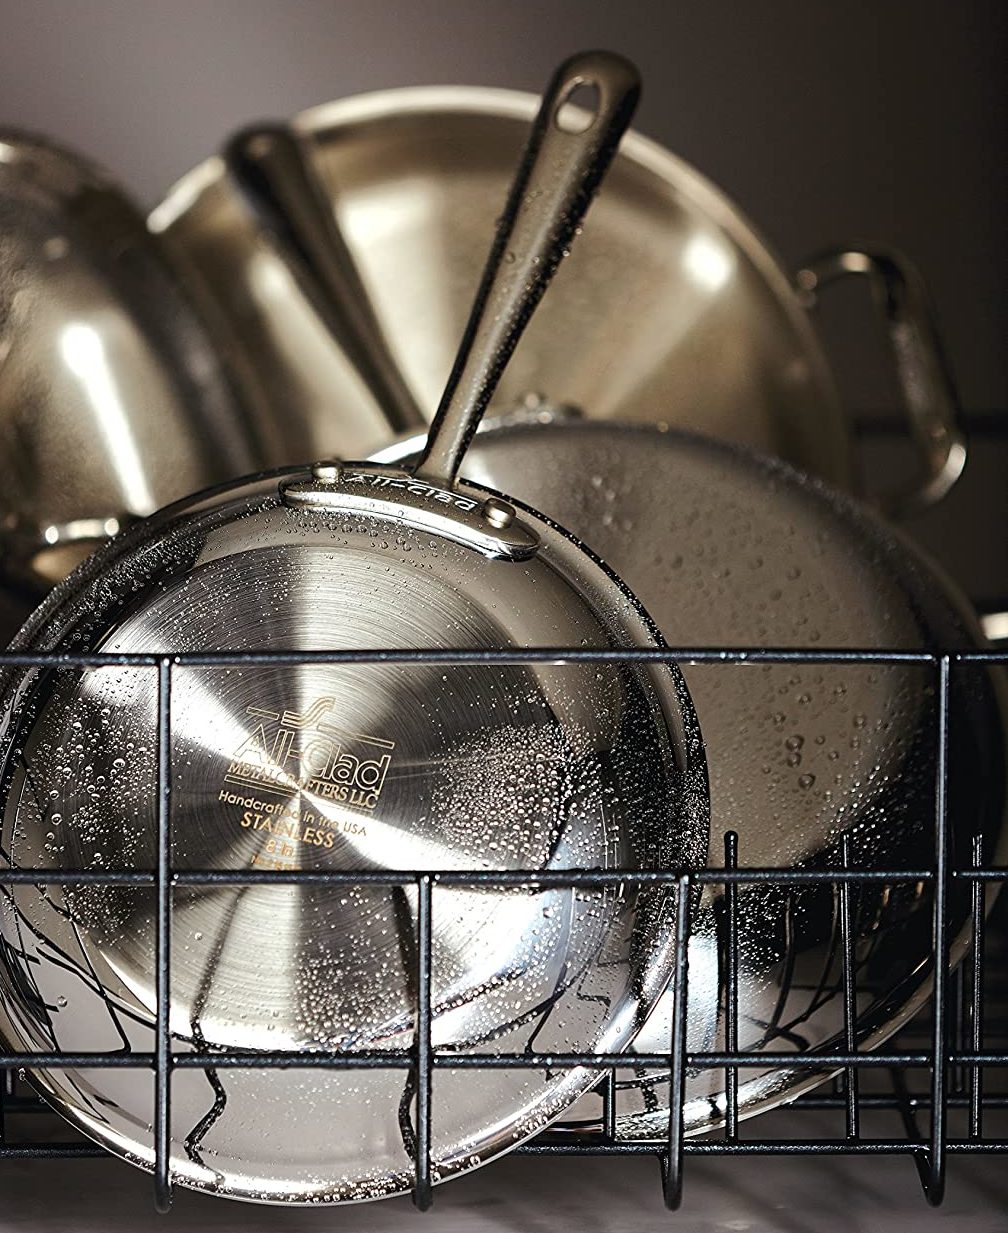 All-clad cookware dishwasher safe